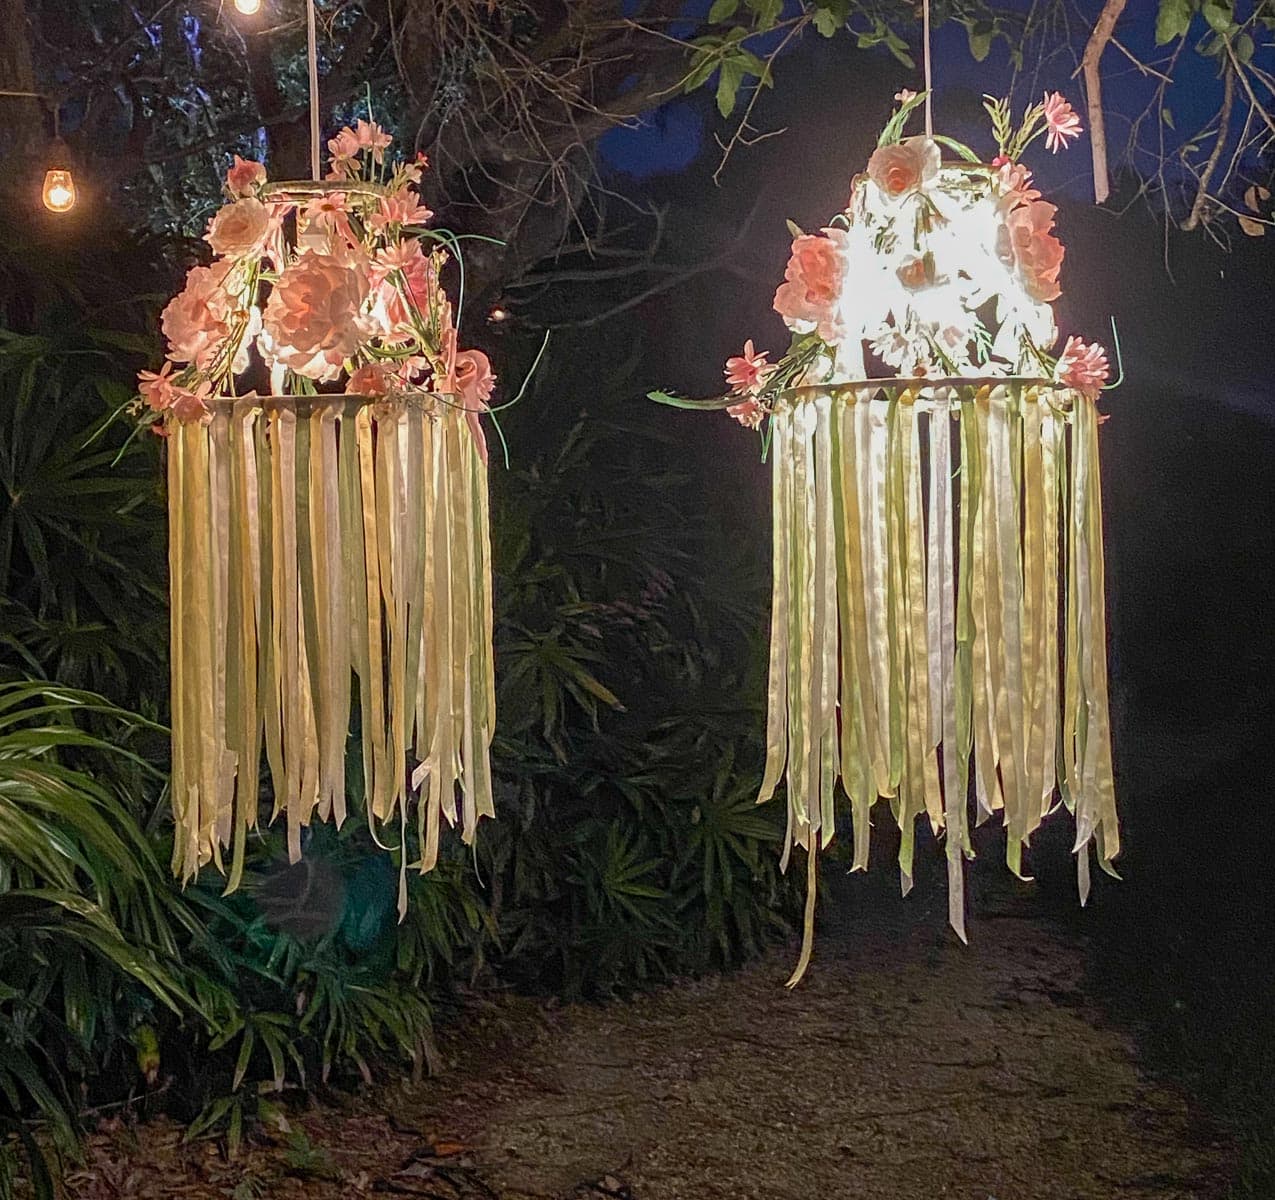 diy floral chandelier at night